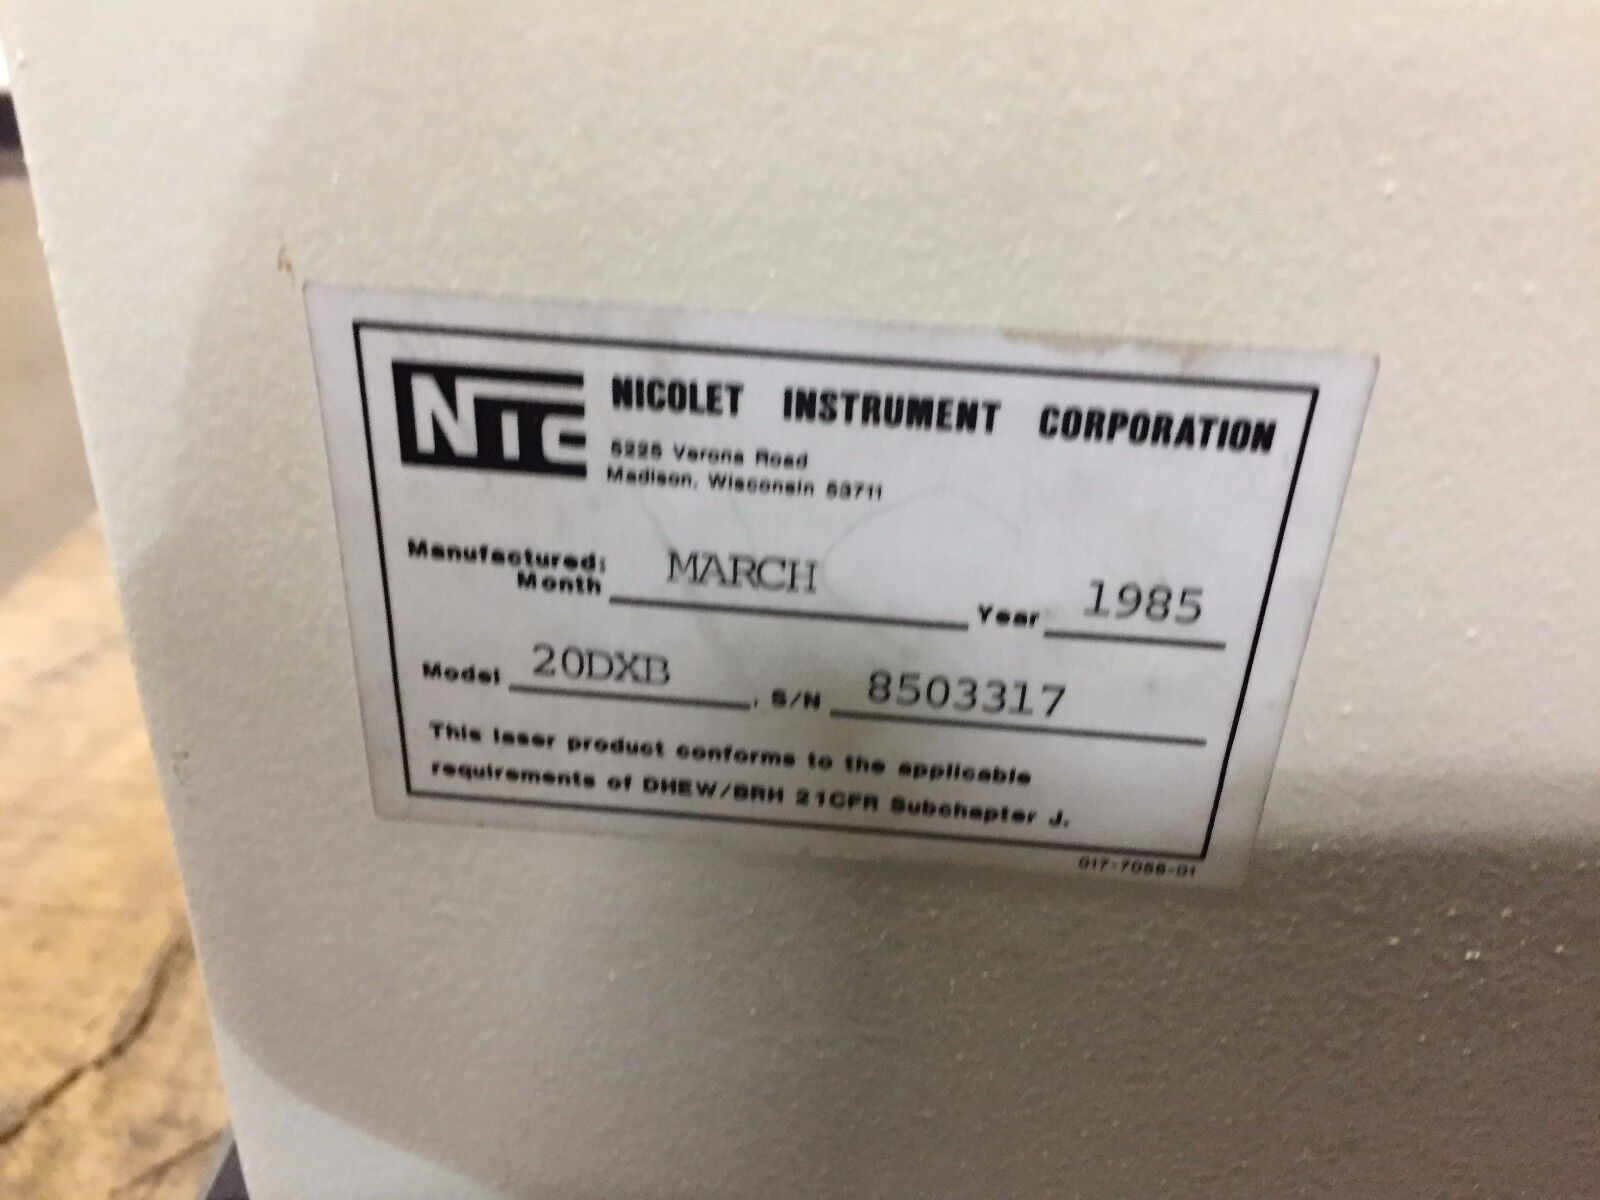 Nicolet FTIR Spectrometer Model 20DXB S/N 8503317